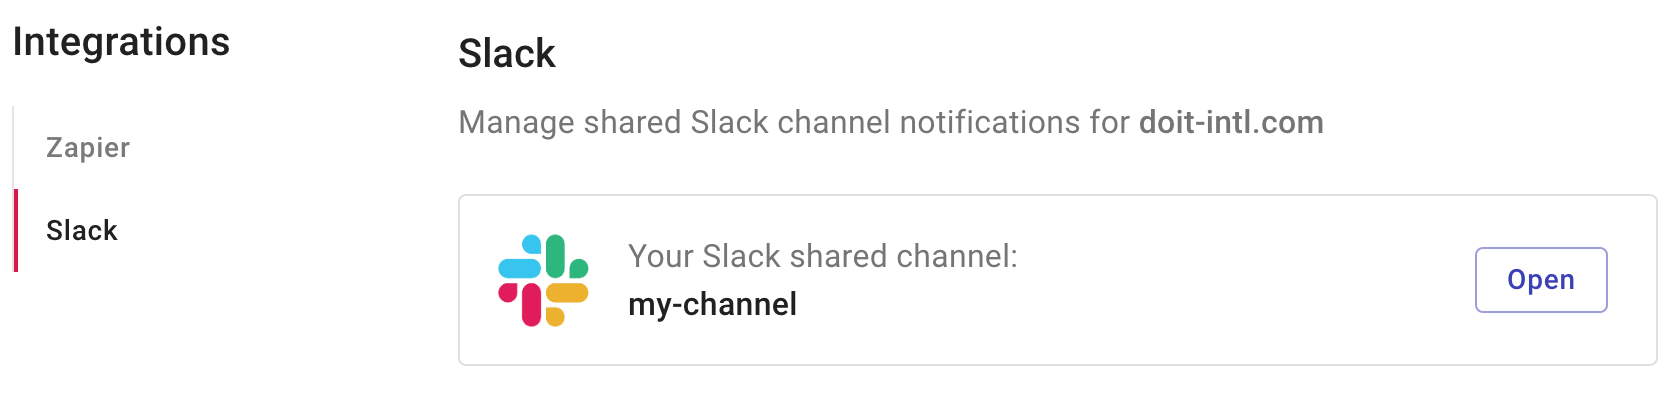 The Slack settings page